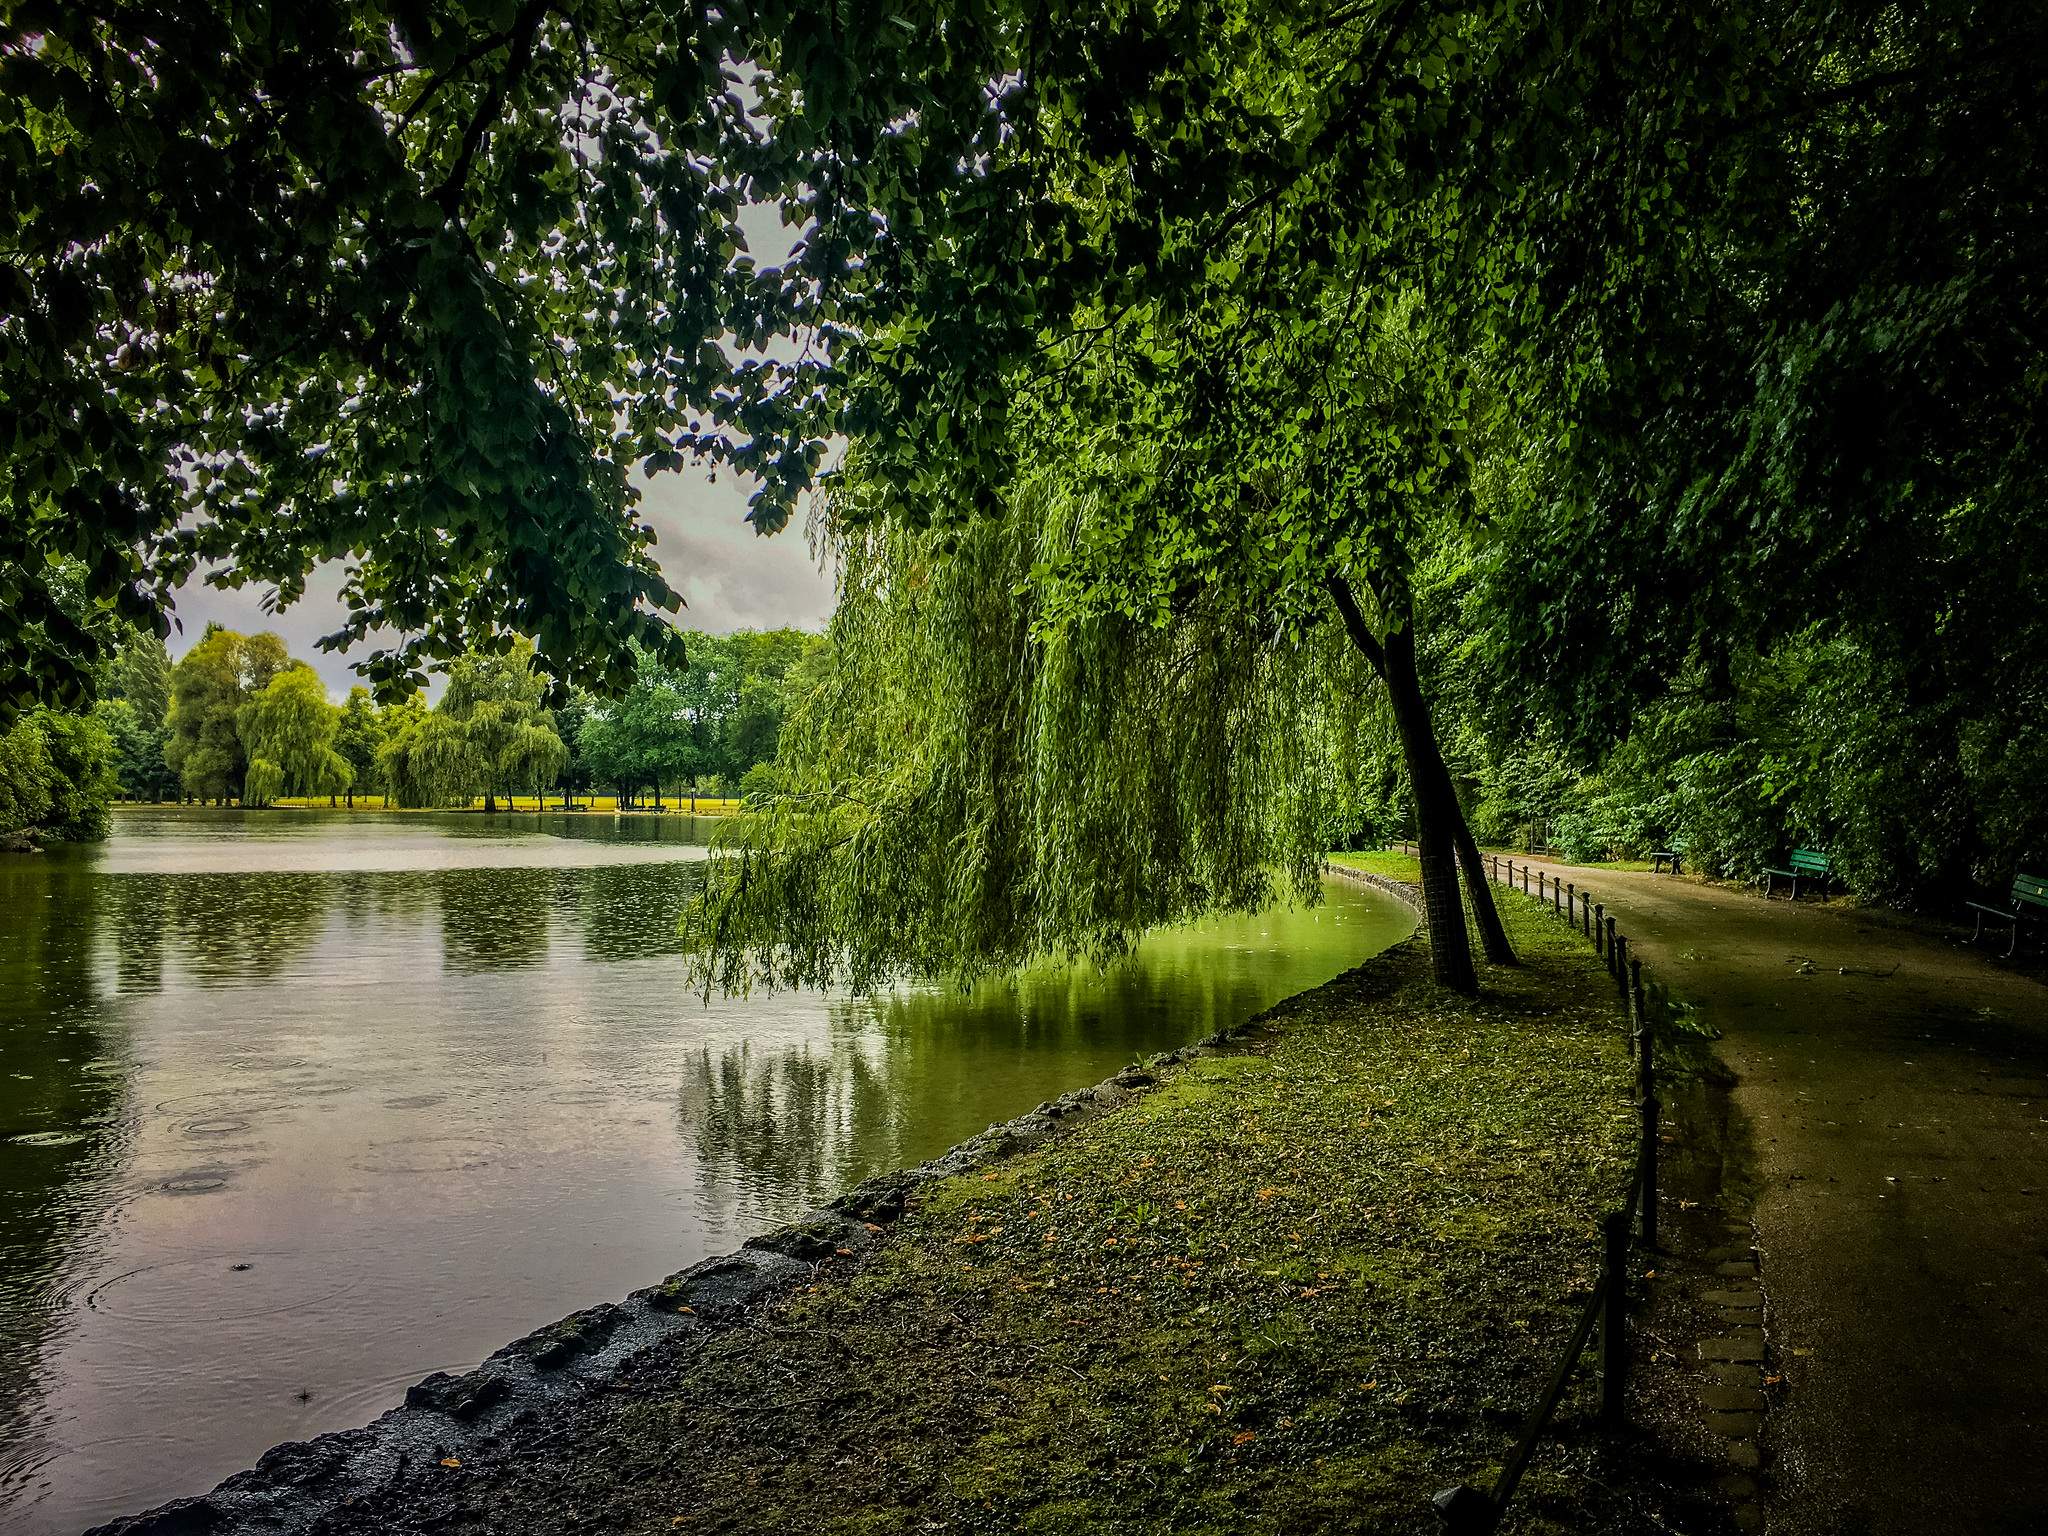 Love the colors, green trees and paths around Englischer Garten, Munich, Germany